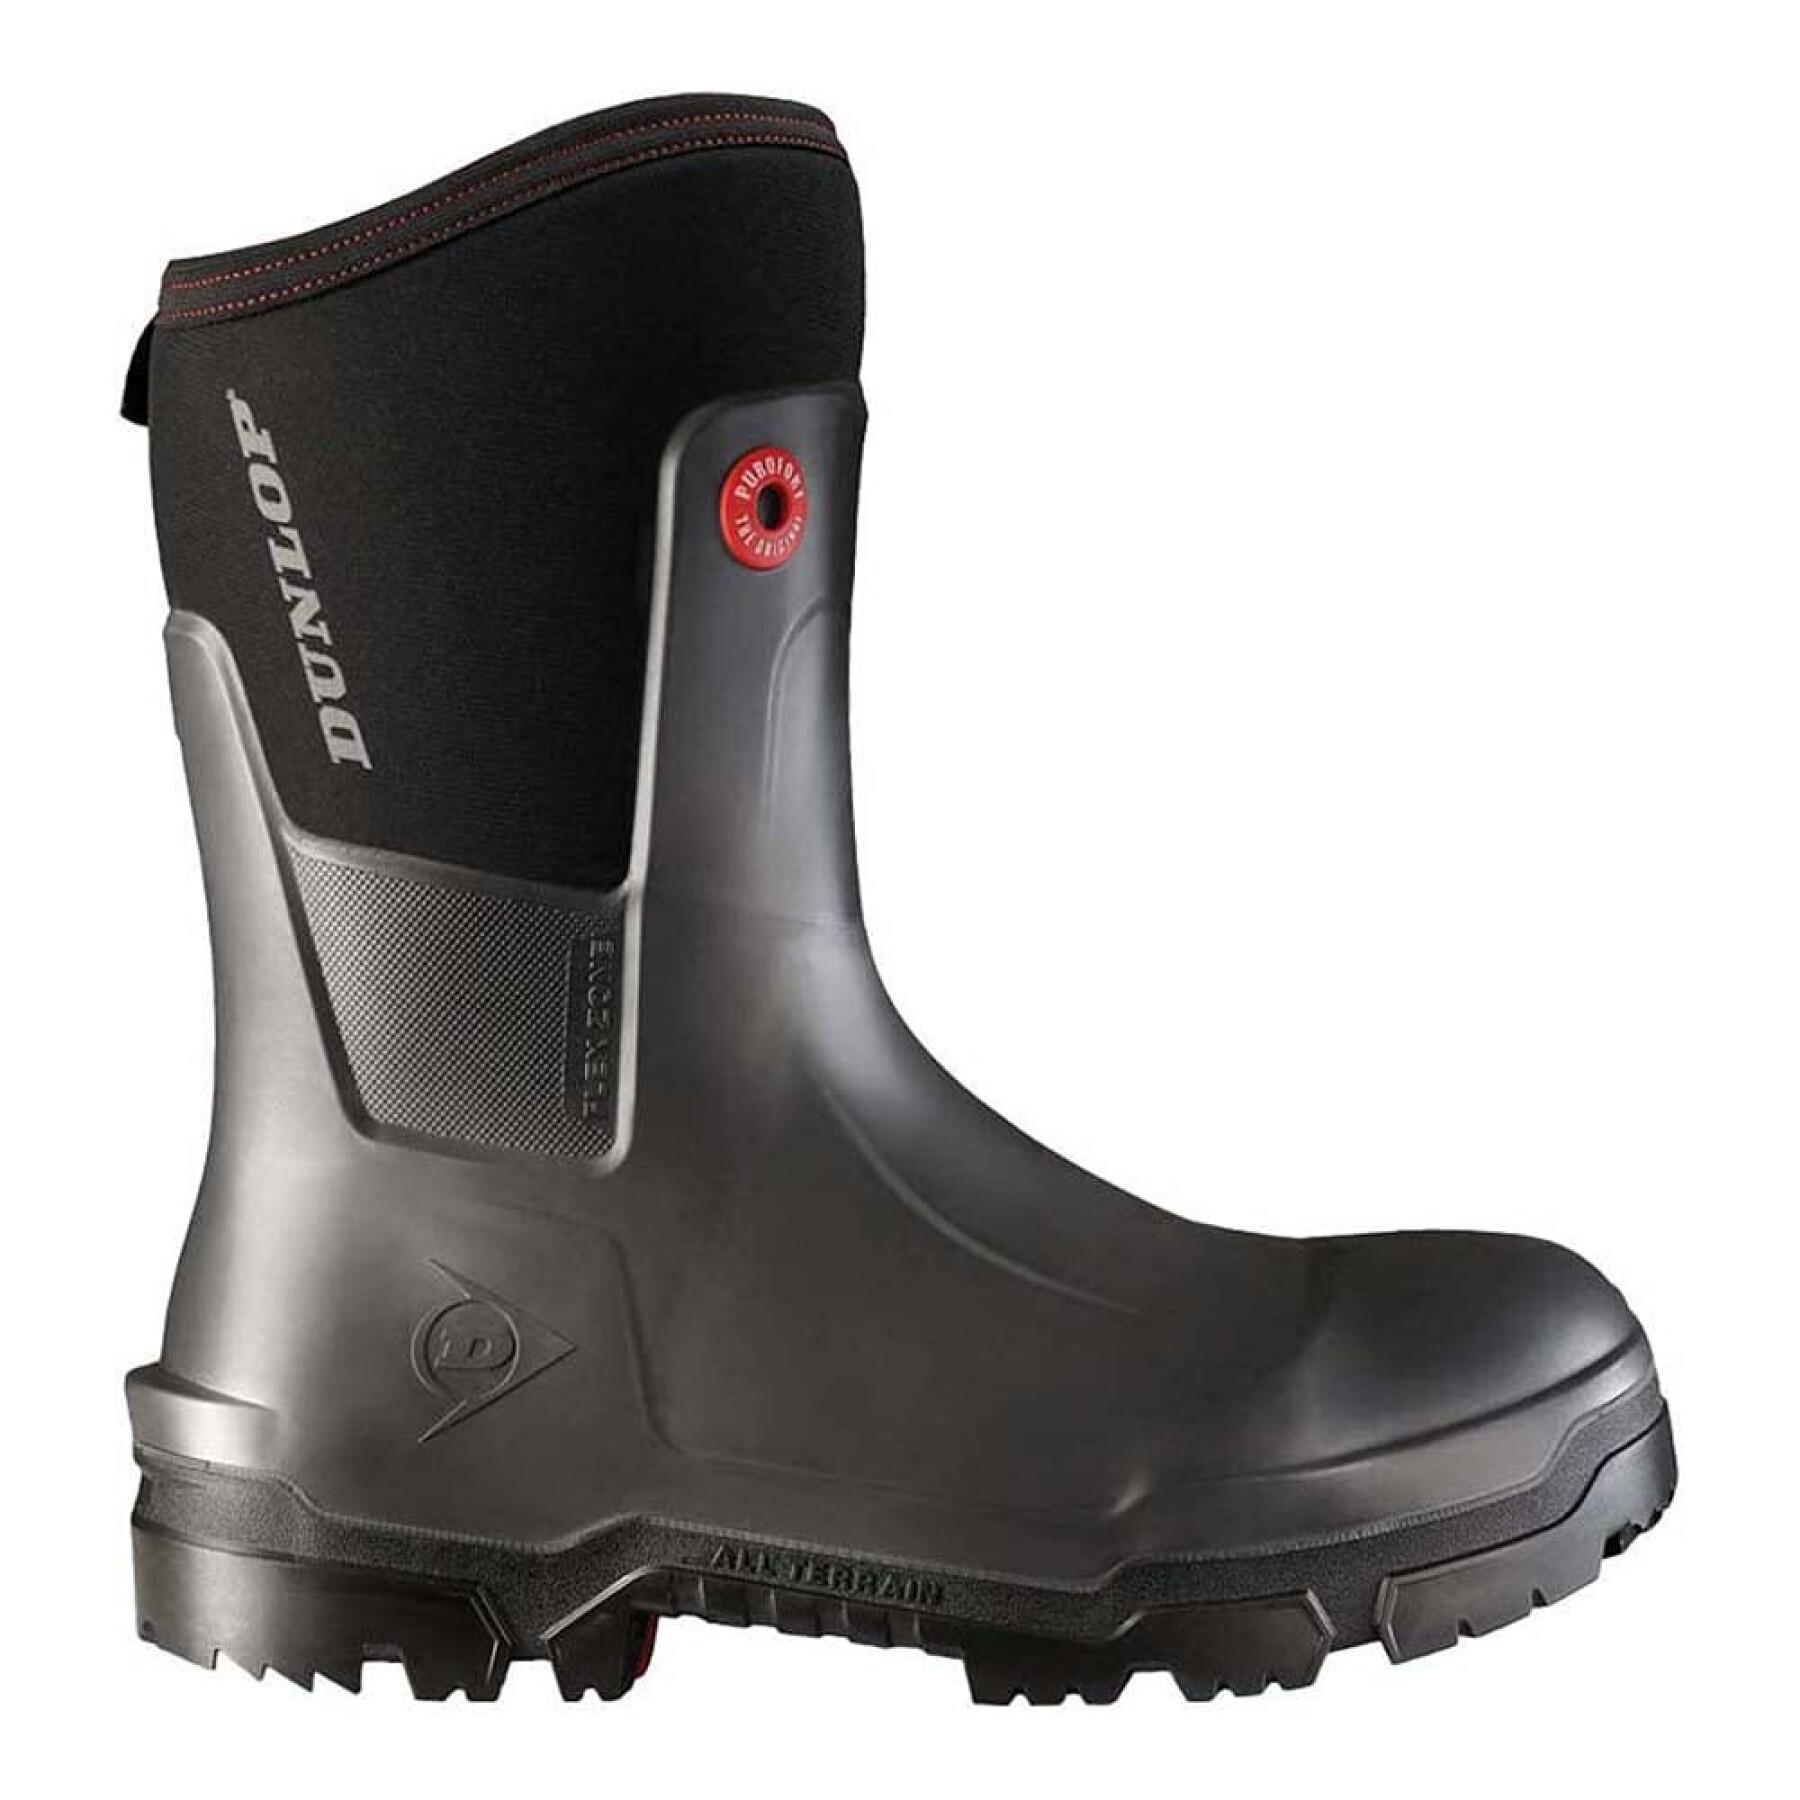 Work boots Dunlop Craftsman Full Safety